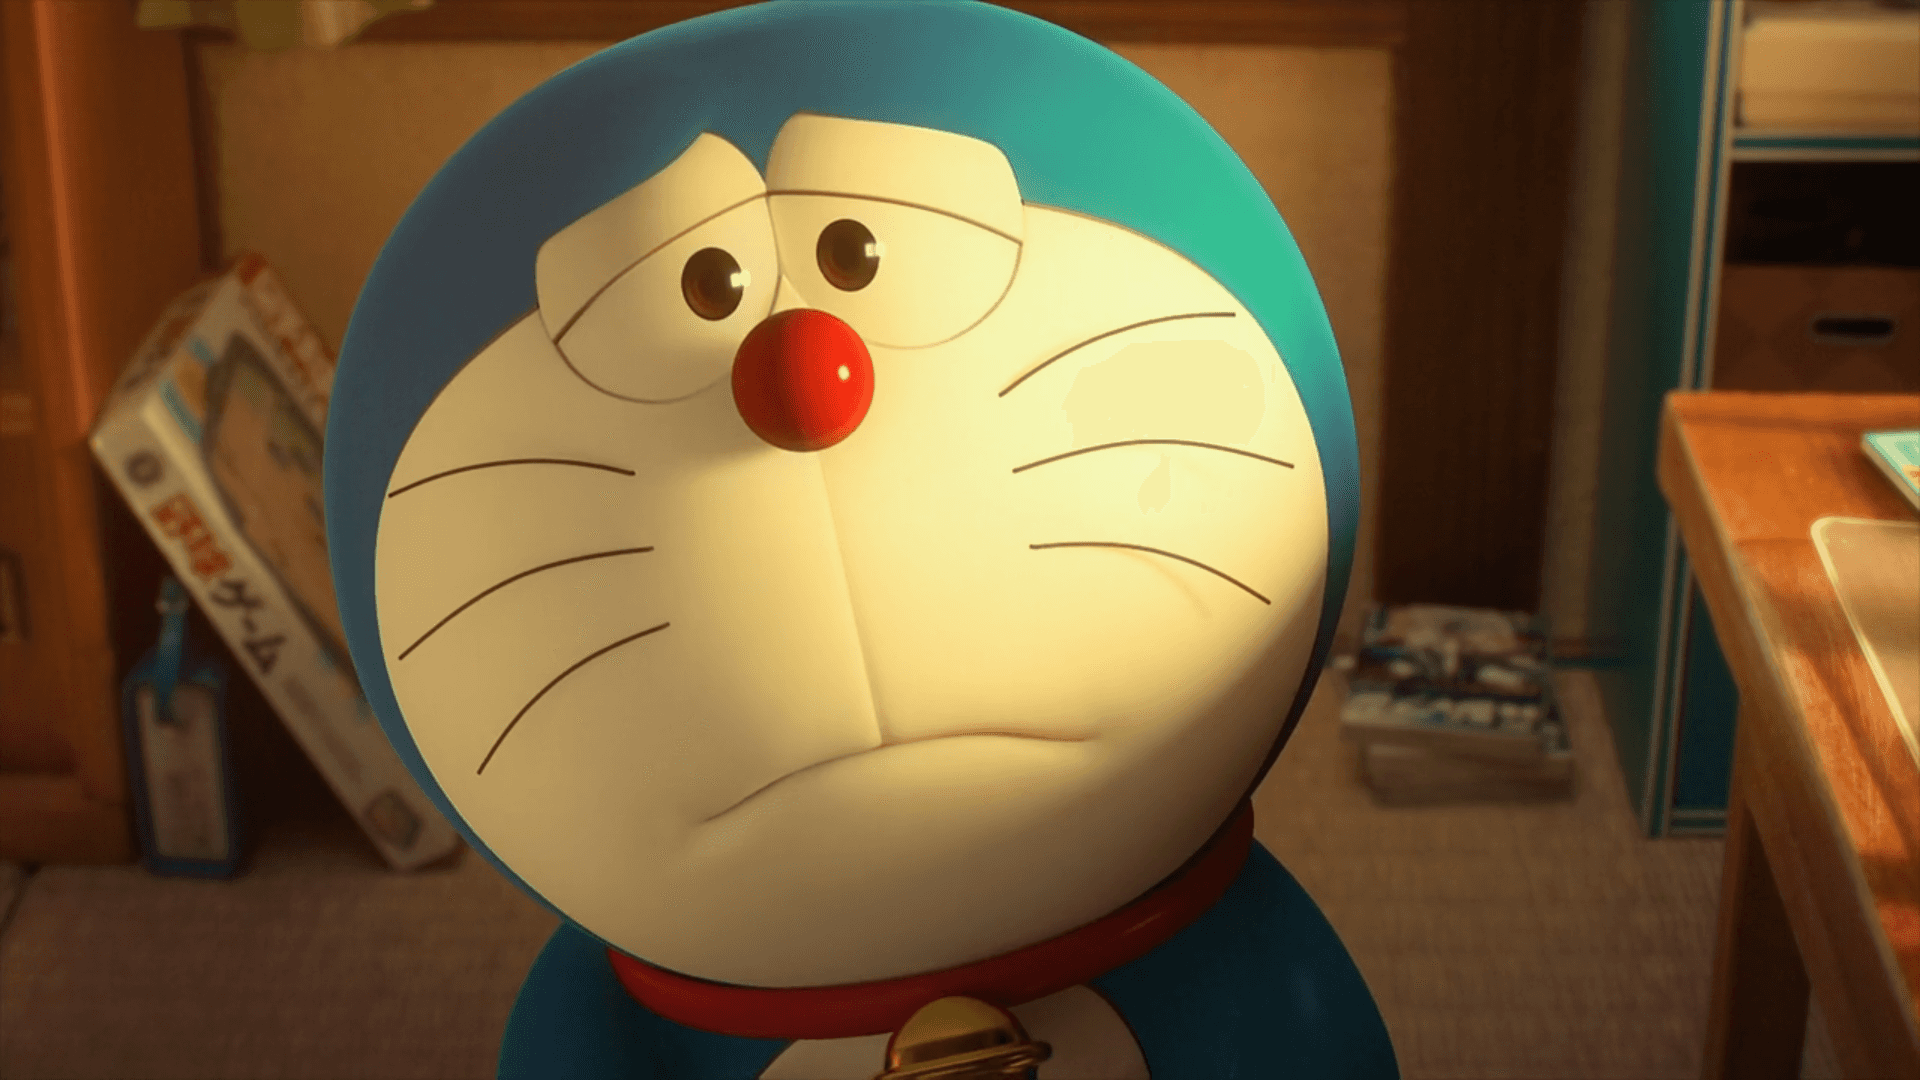 Doraemon in his World of Imagination.